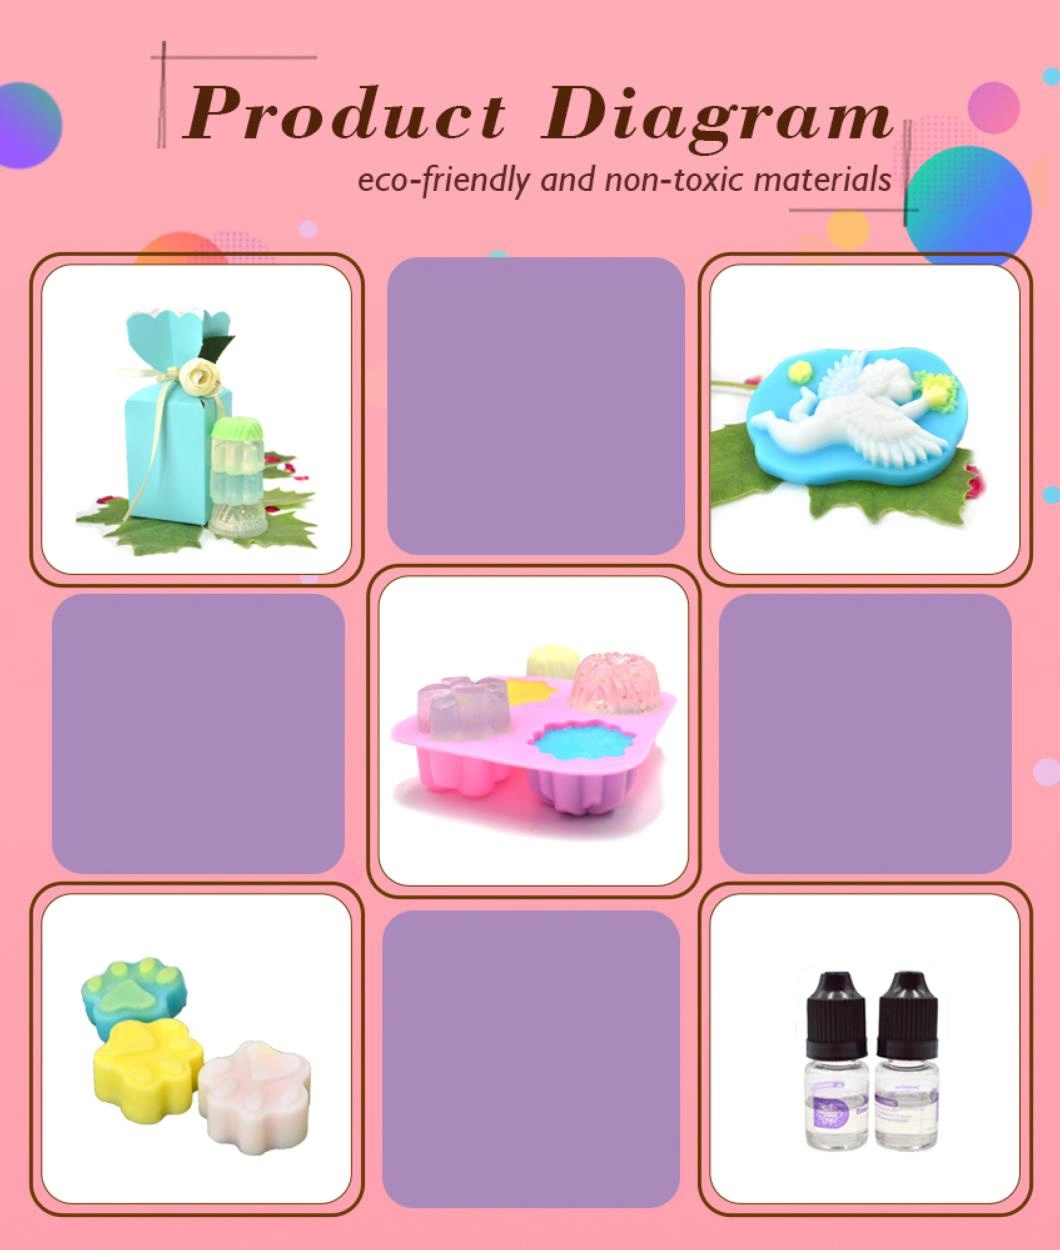 Customize Private Label Colorful Fun Soap Making Kit